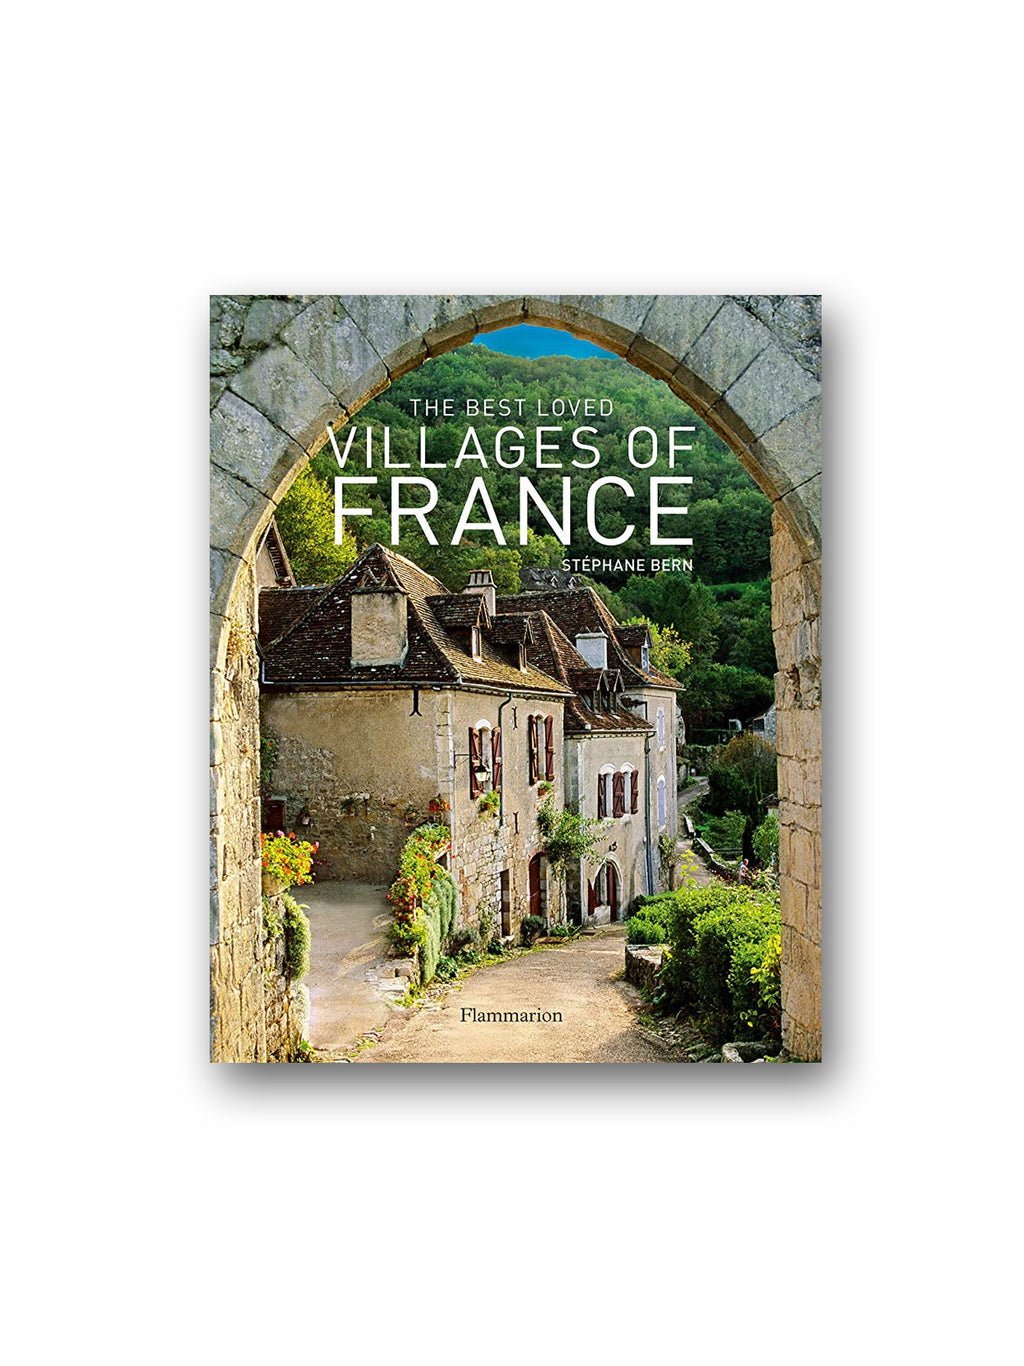 The Best Loved Villages of France